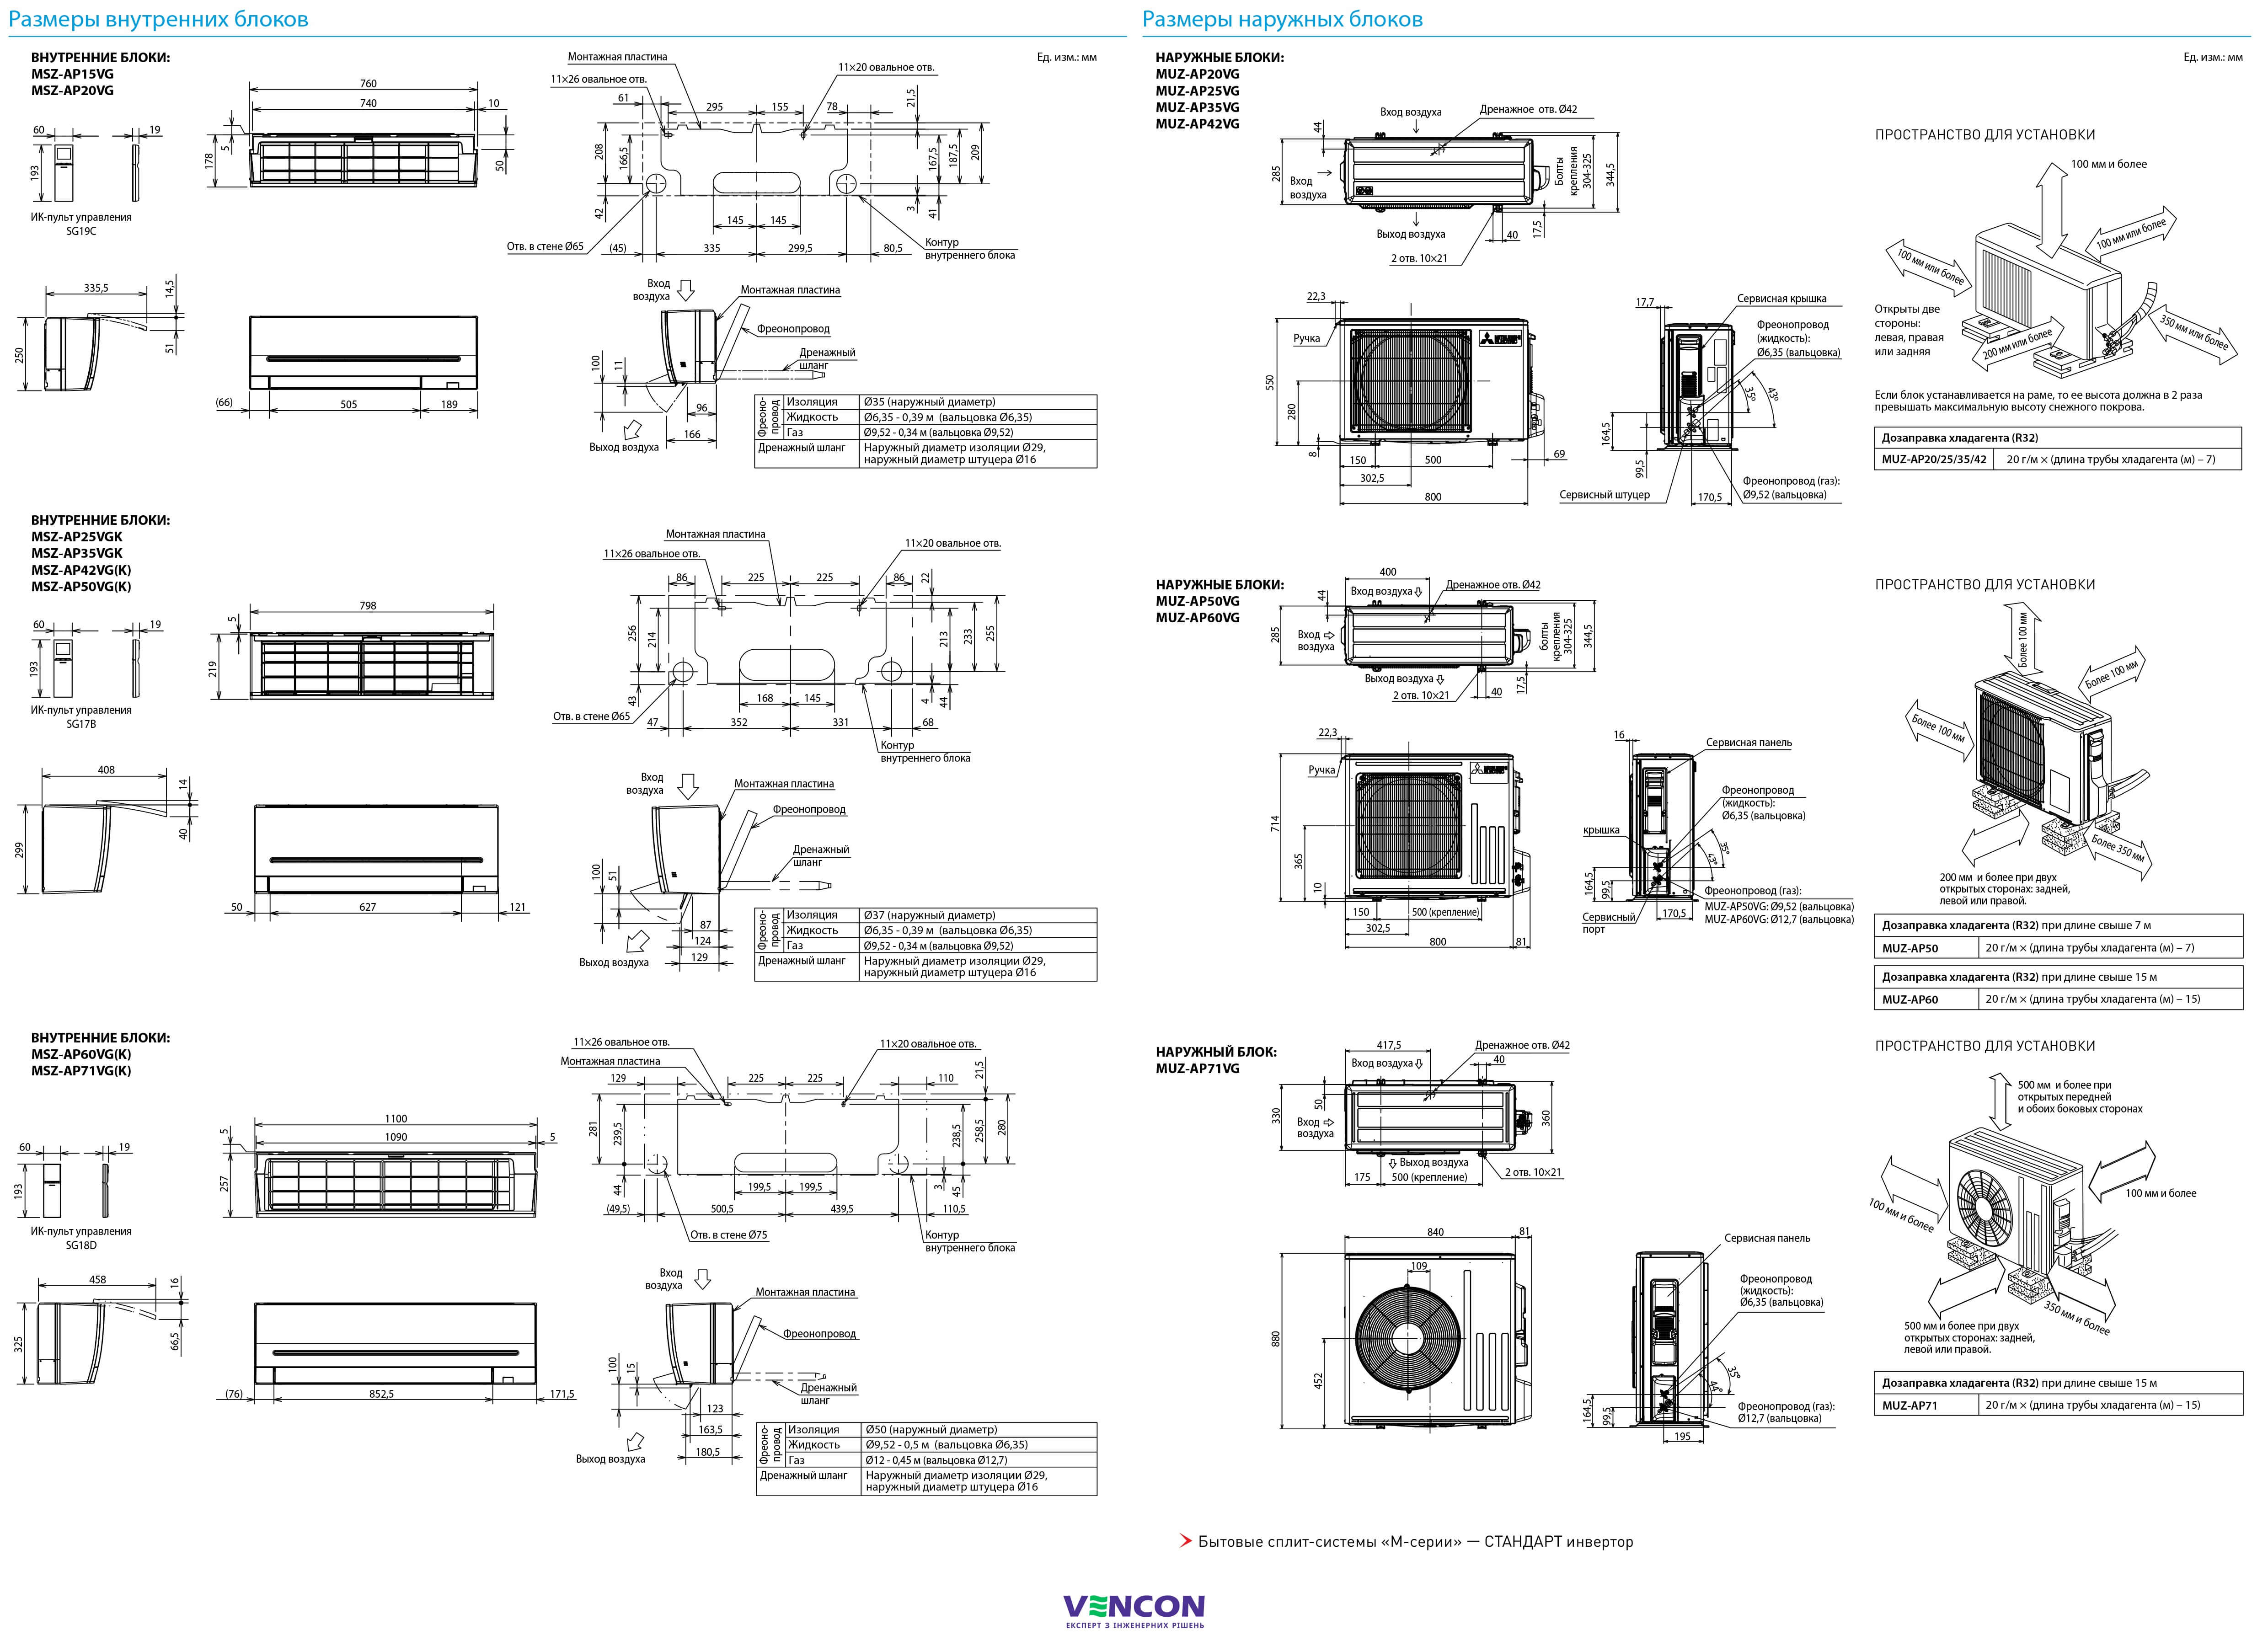 Mitsubishi Electric Standard Inverter MSZ-AP20VG/MUZ-AP20VG Габаритные размеры